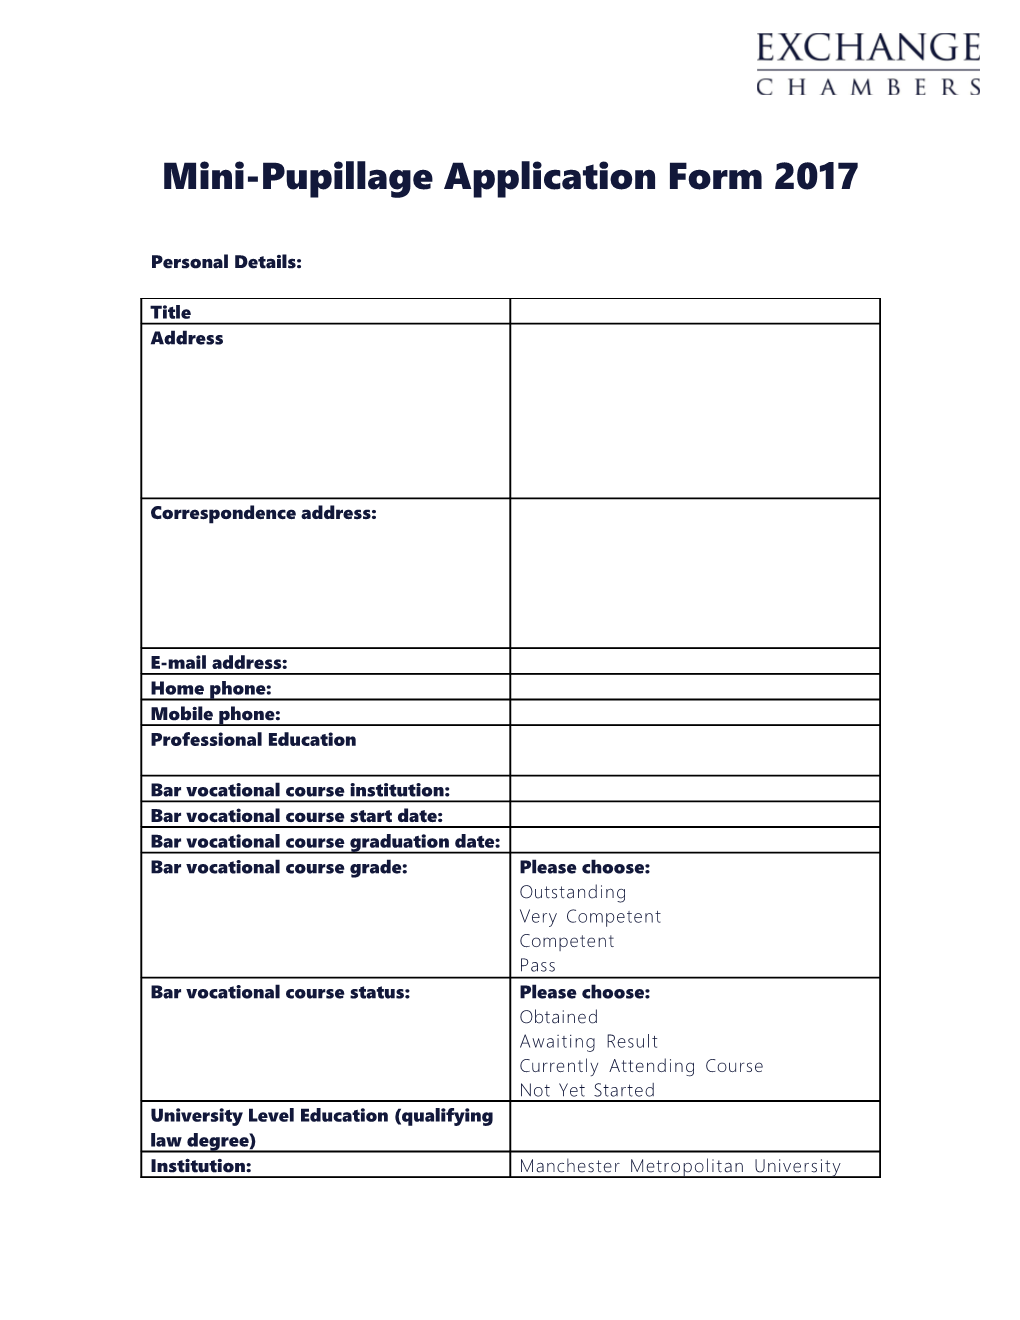 Mini-Pupillage Application Form 2017